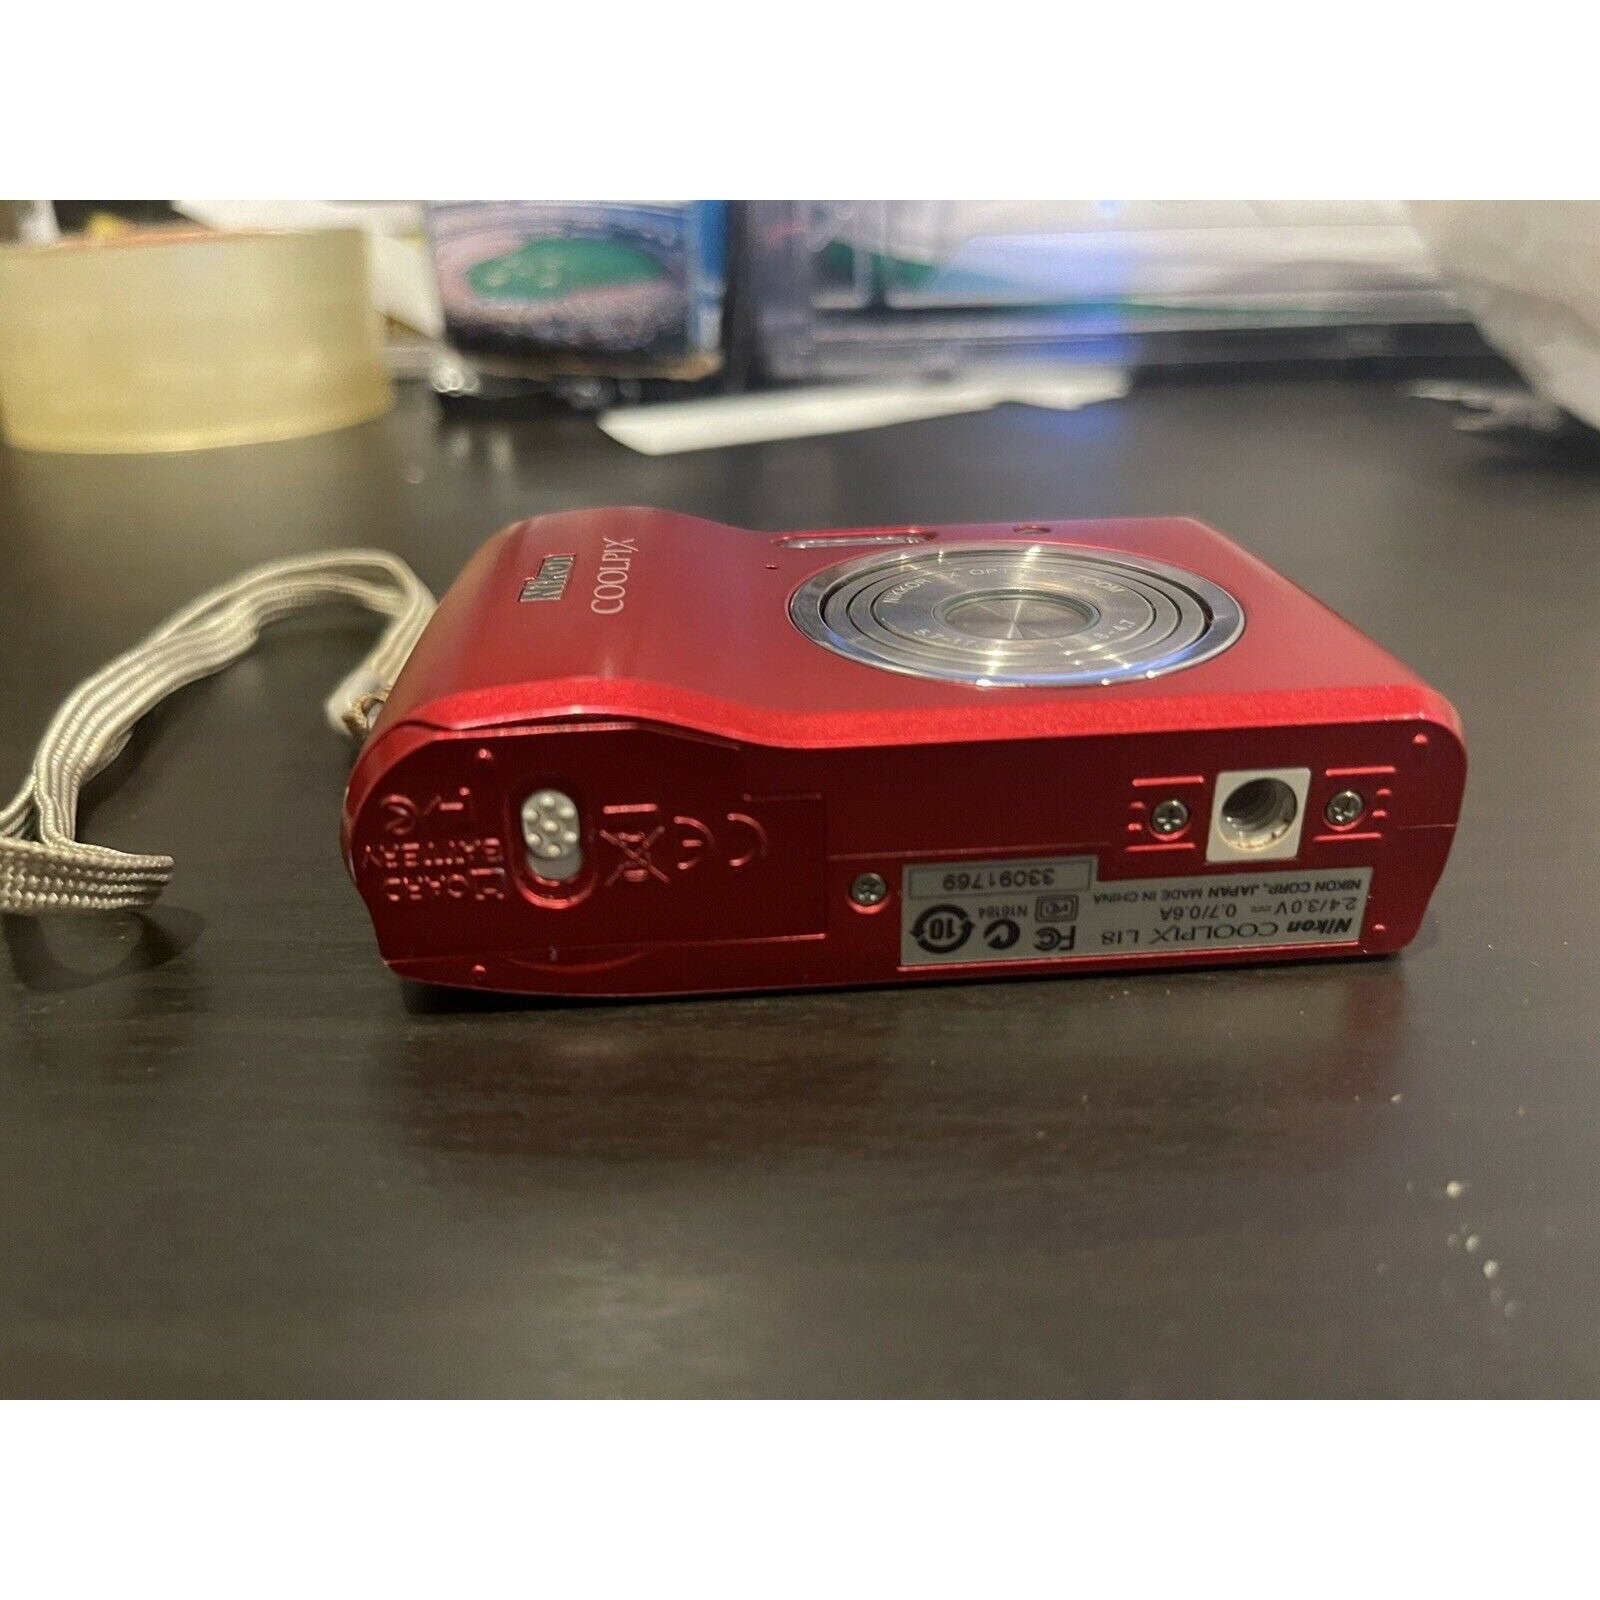 Nikon COOLPIX L18 8.0MP Pocket Digital Camera - Red